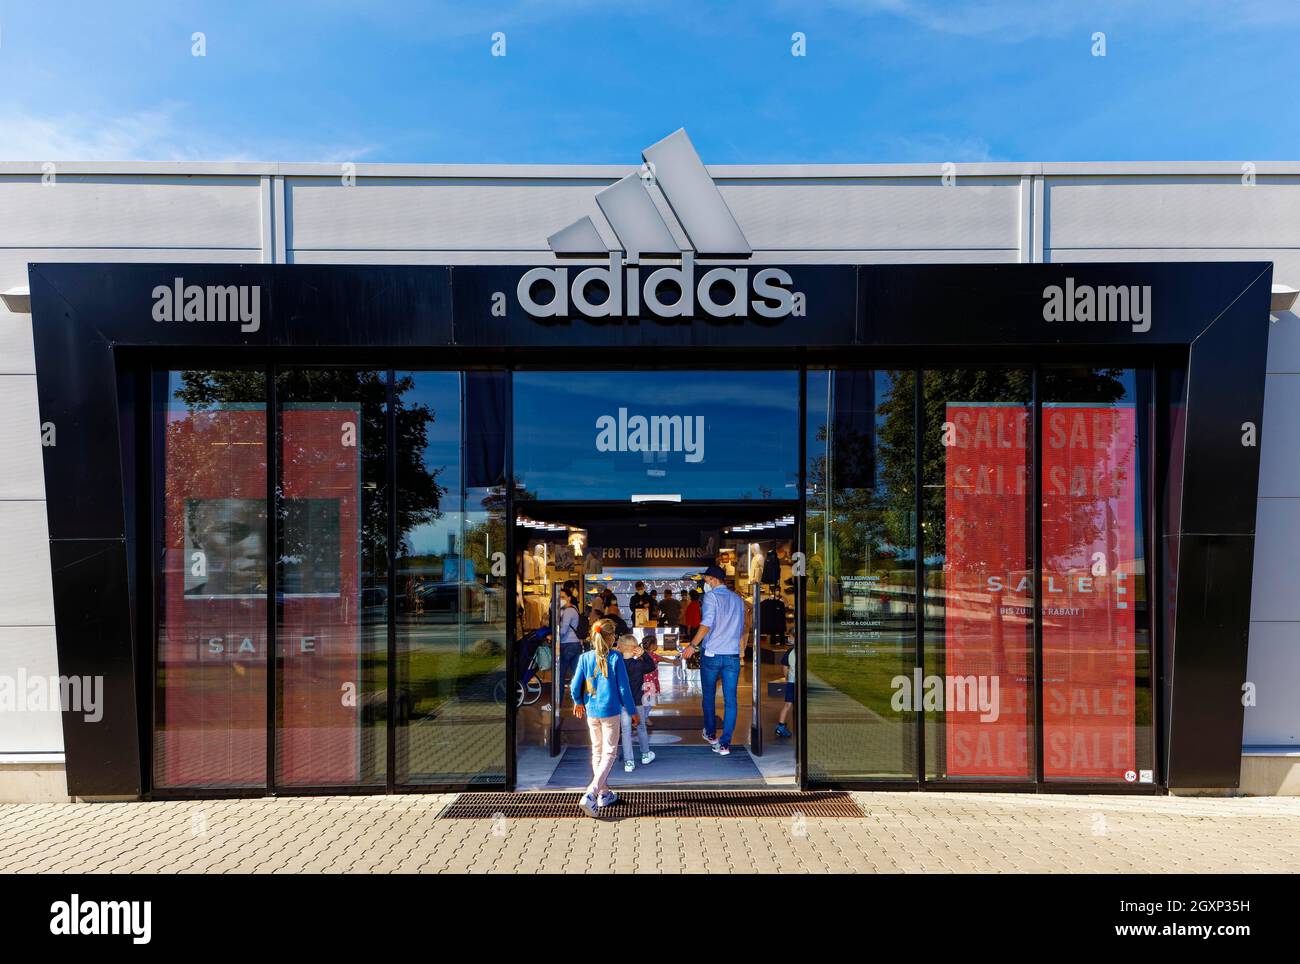 pierna rural Fobia Adidas factory outlet -Fotos und -Bildmaterial in hoher Auflösung – Alamy